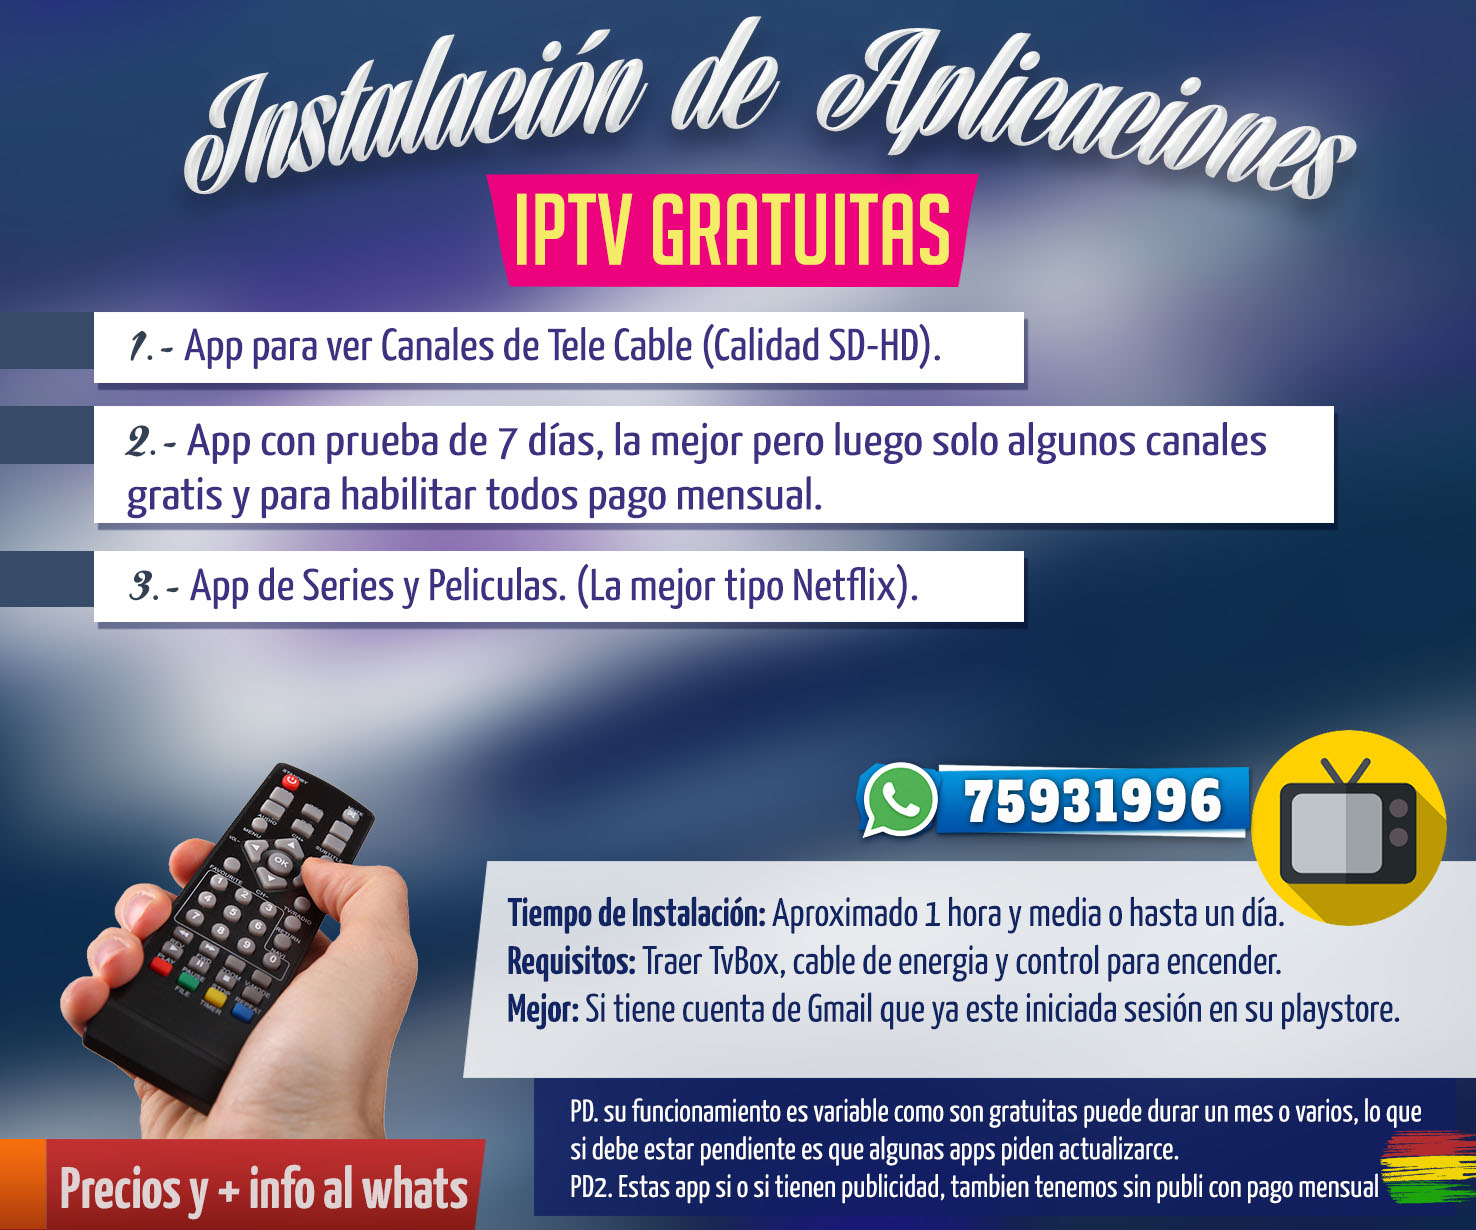 Publi Nueva IPTV01-marzo2021